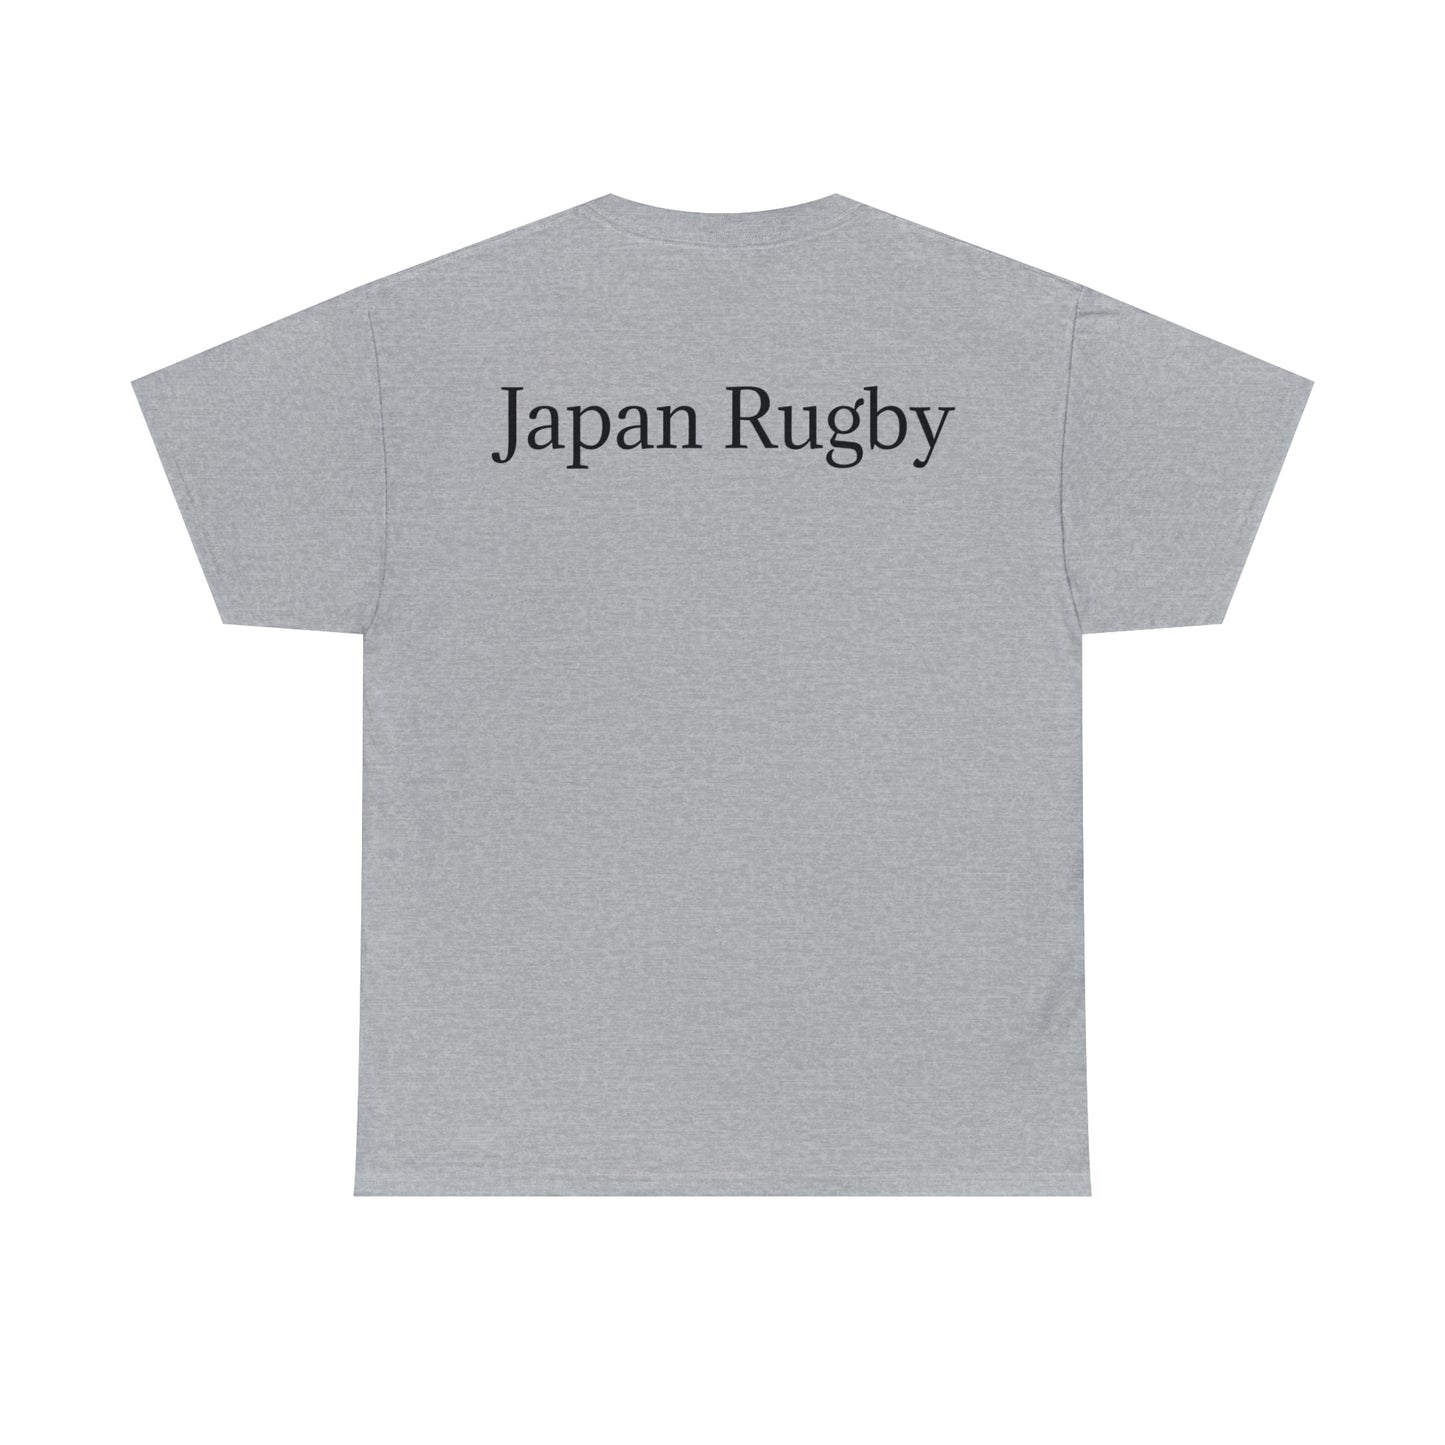 Ready Japan - light shirts